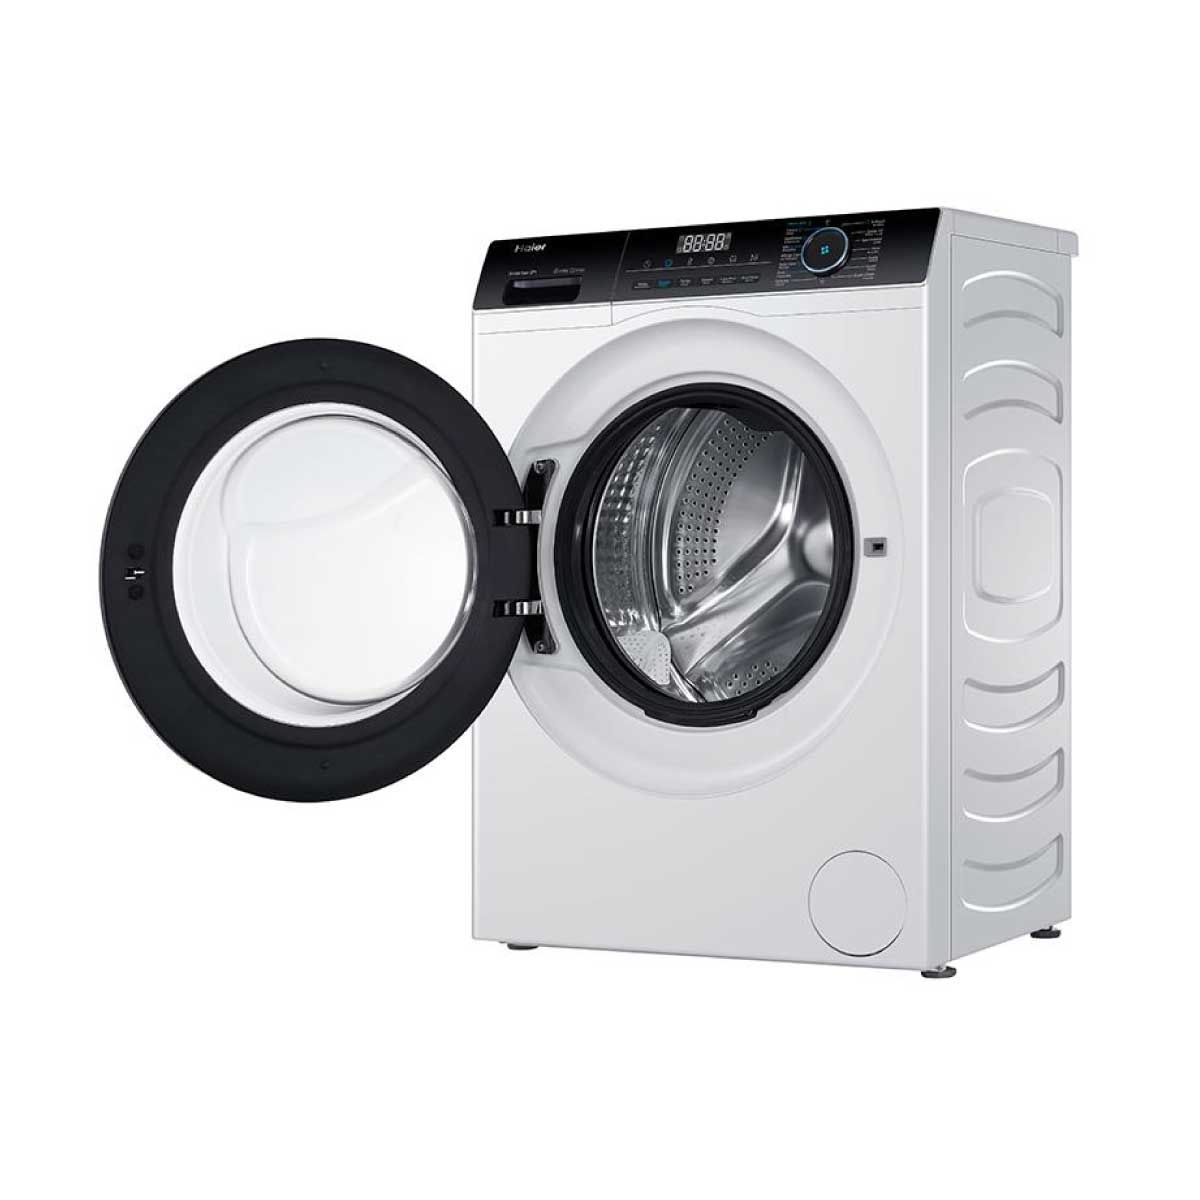 HAIER เครื่องซักผ้าฝาหน้า 8KG INVERTER สีขาว รุ่น HW80-BP12929